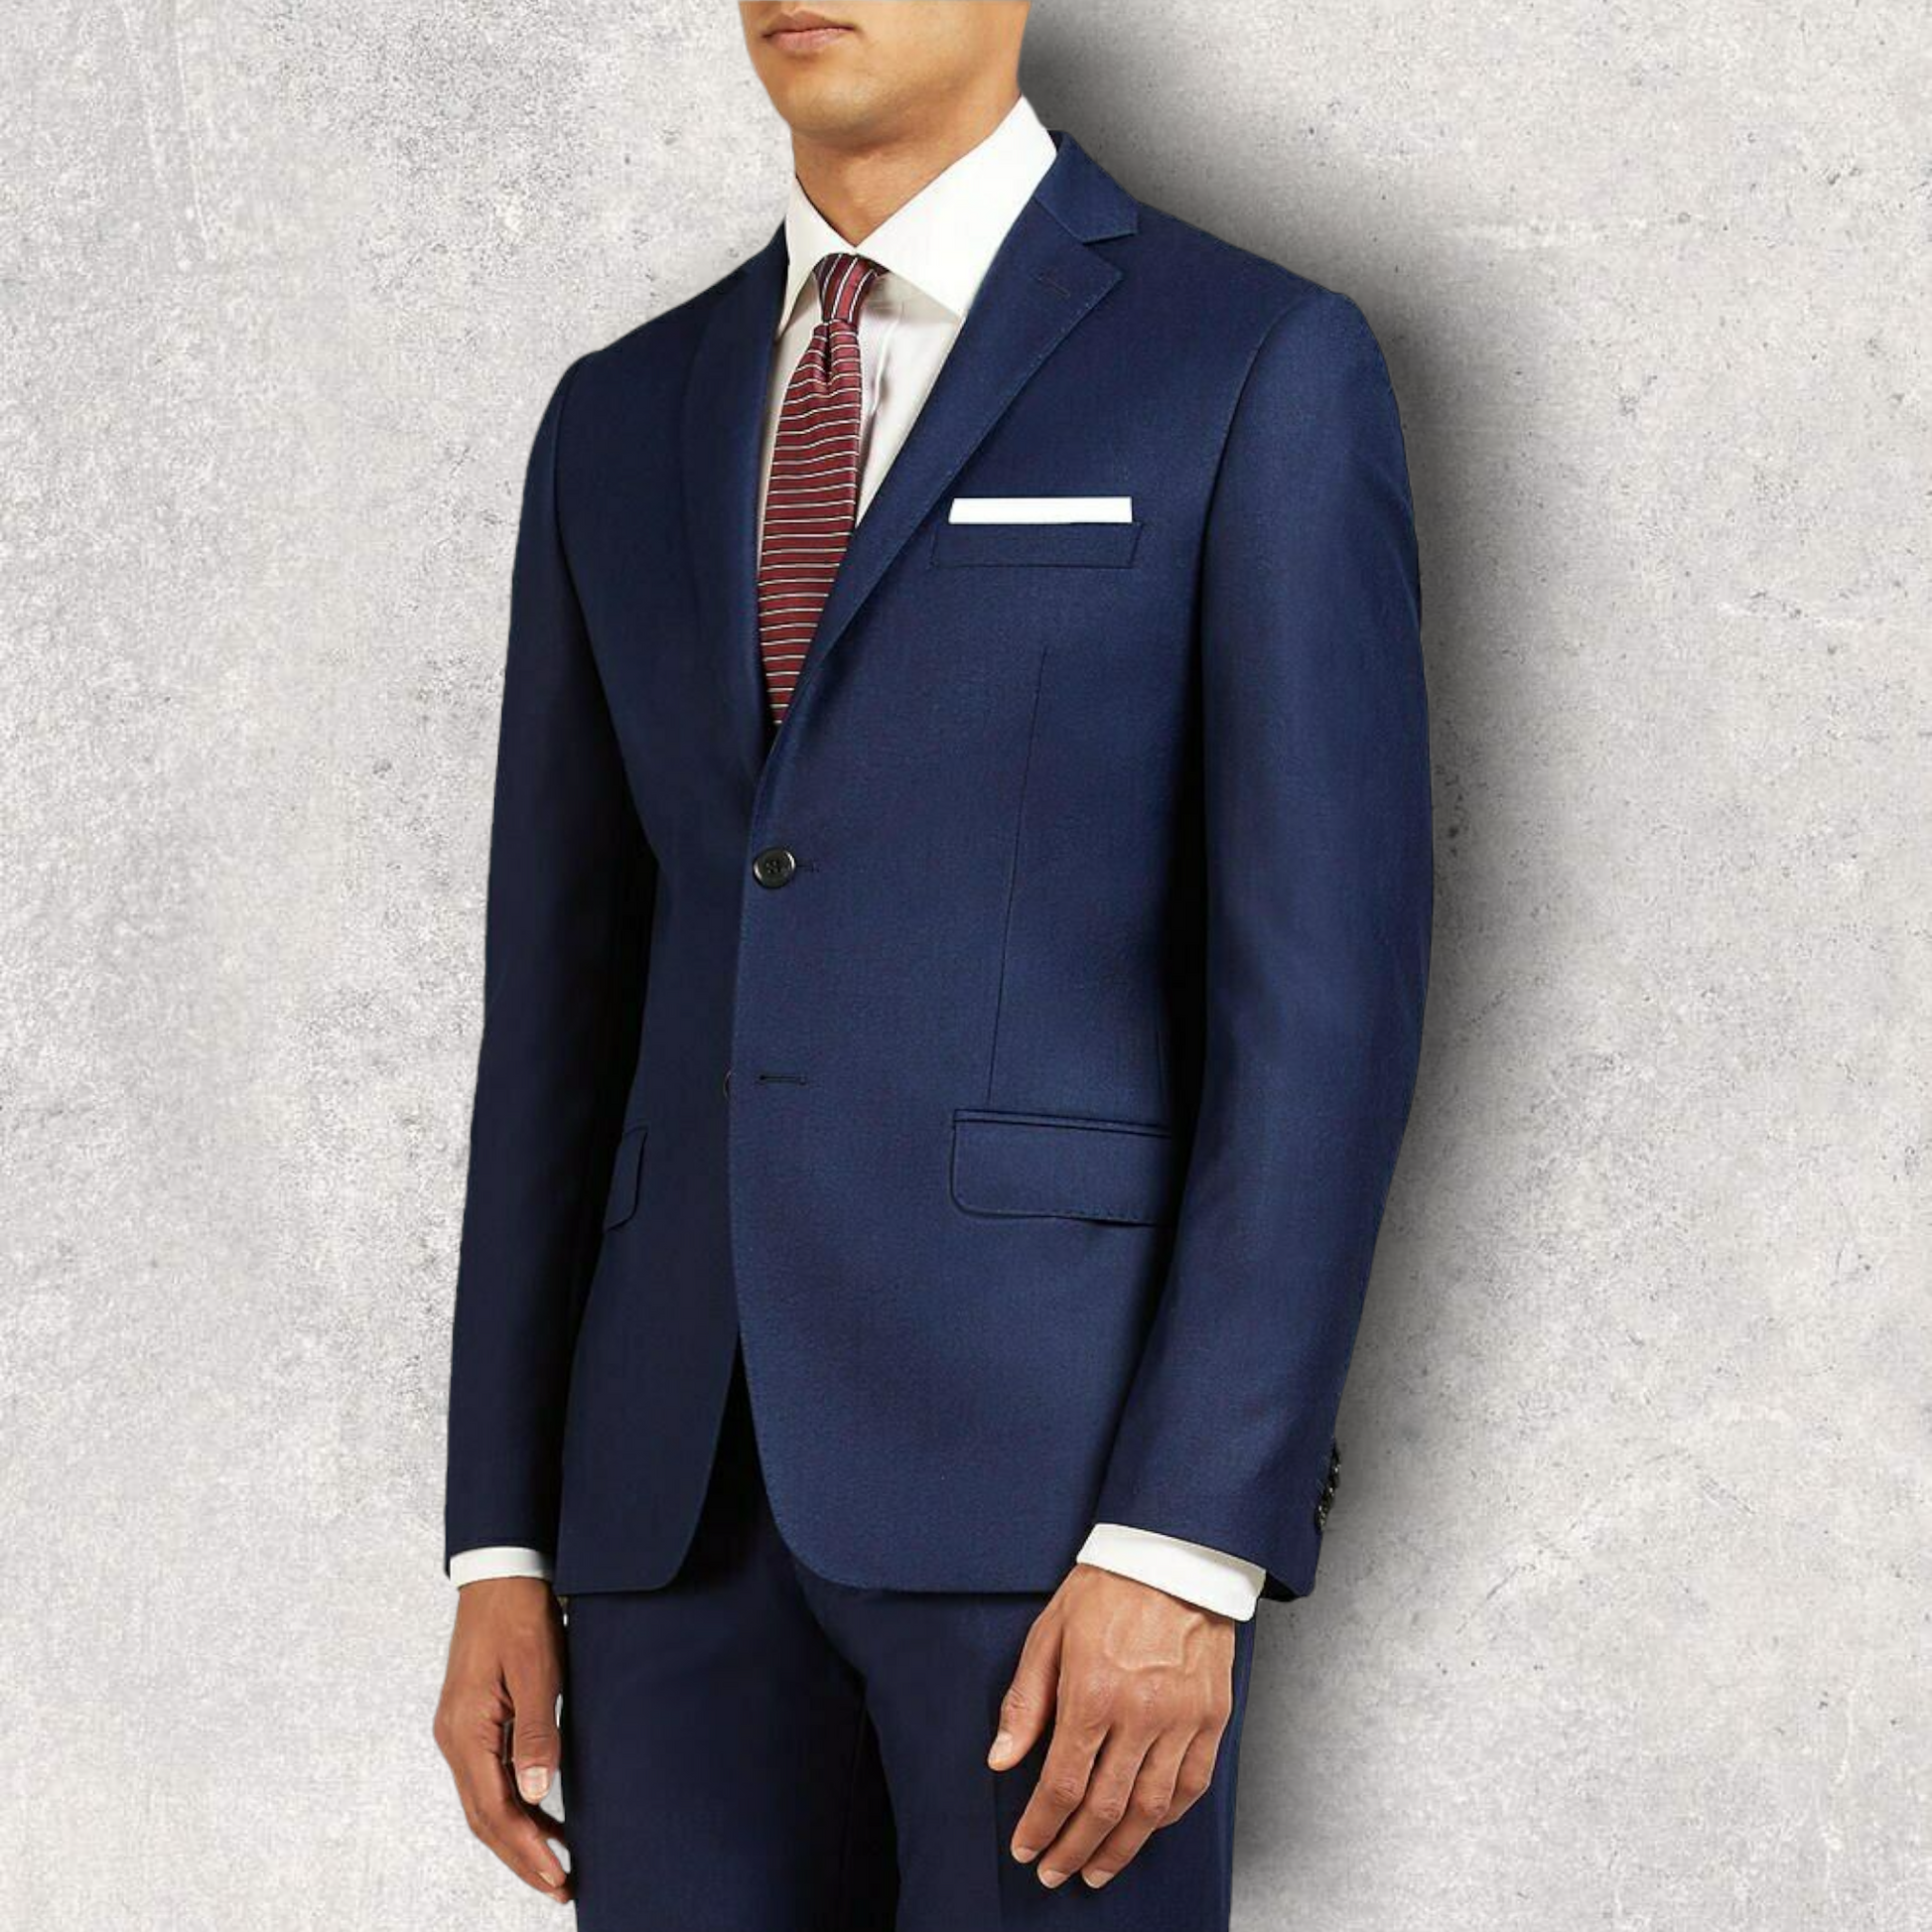 Daniel Hetcher Pindot Men's Blue Tailored Mens Suit Jacket UK 40L Timeless Fashions